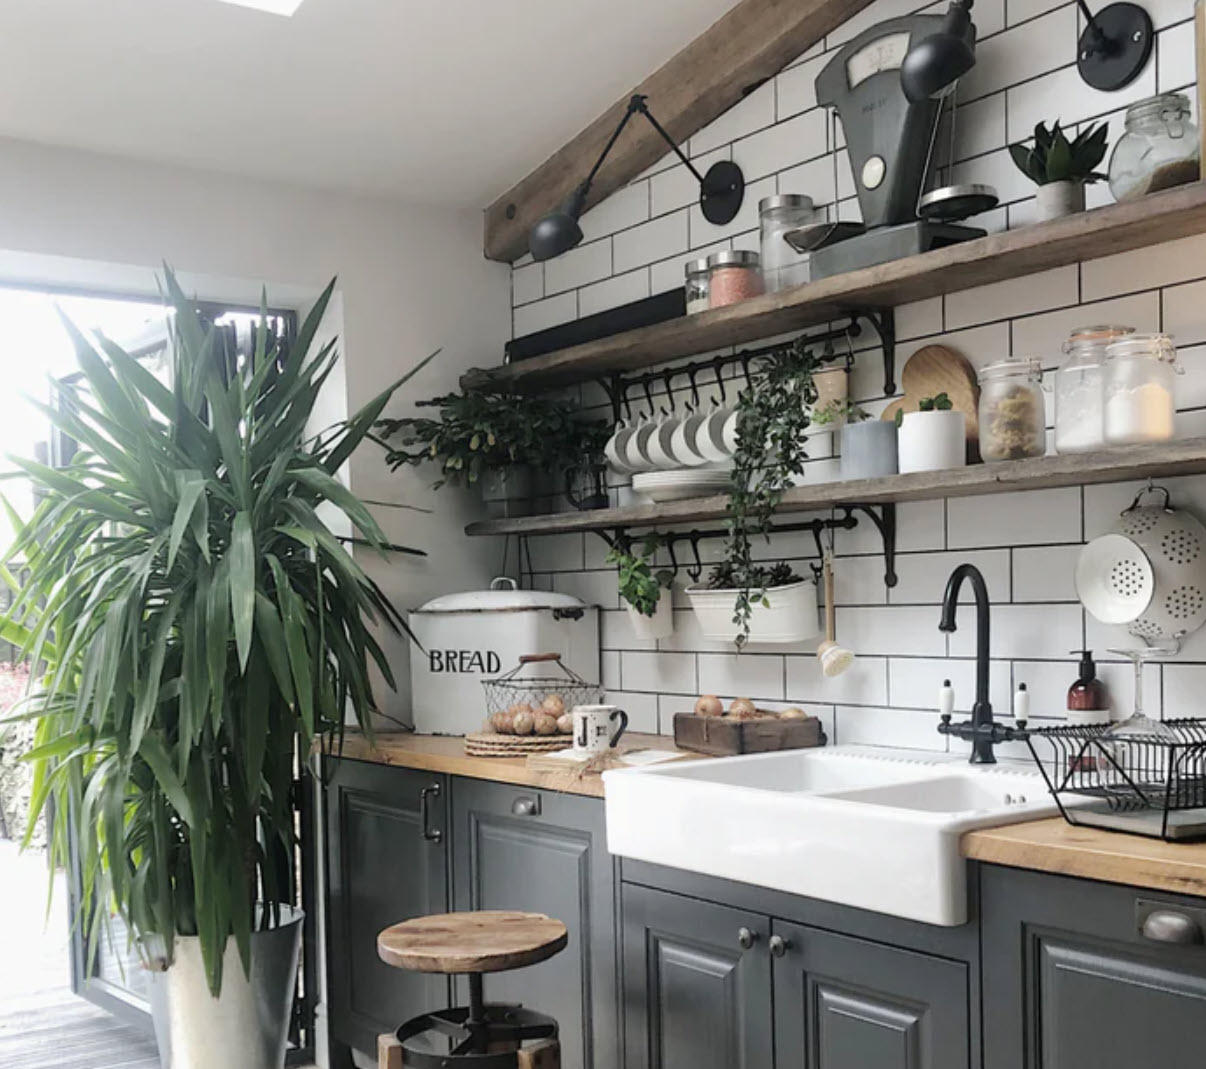 2023 Kitchen Design Ideas For Homes With Minimalist Backsplashes